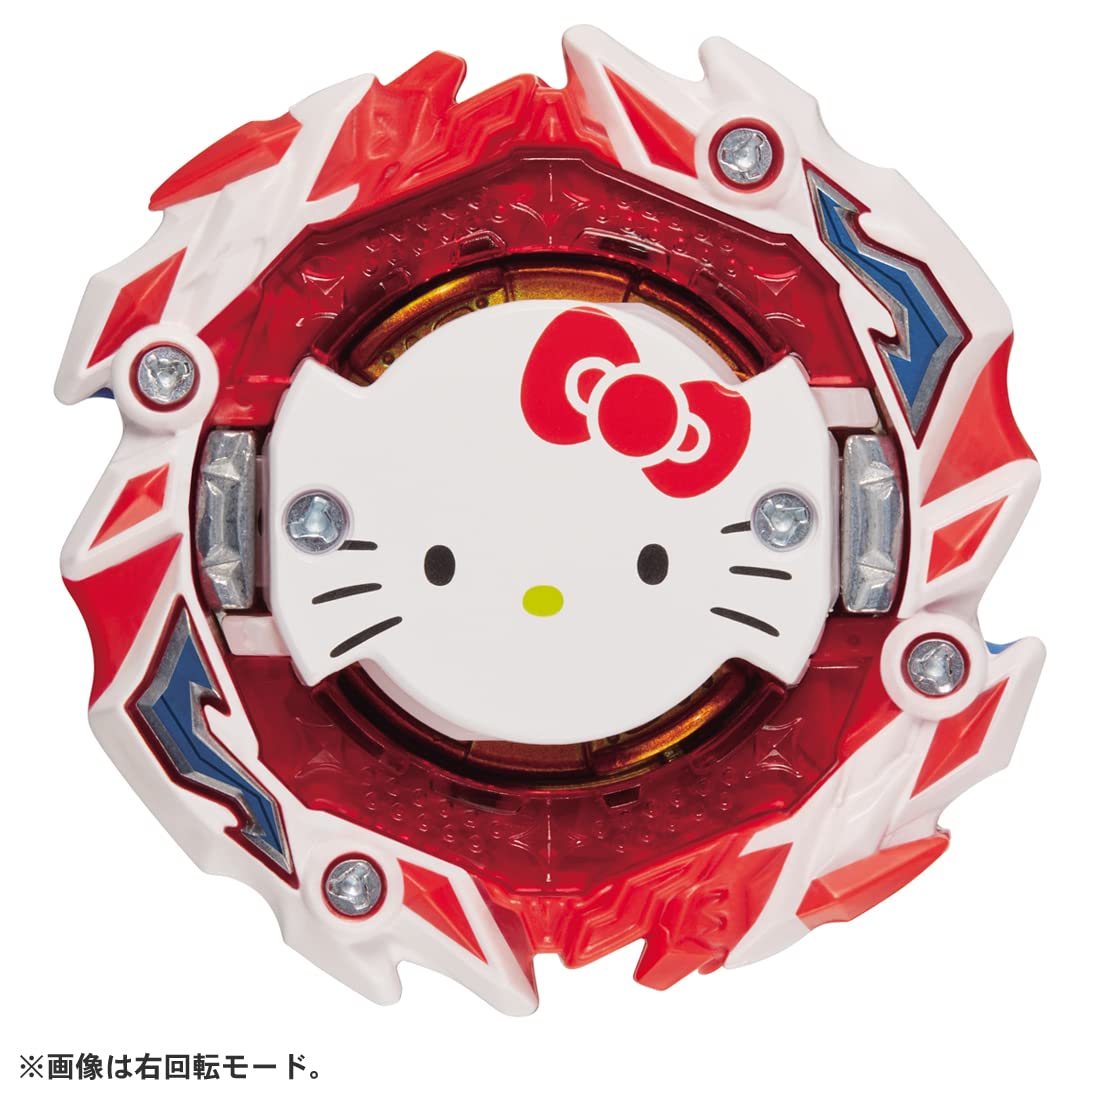 Takara Tomy Booster Astral Hello Kitty.Ov.R'-0 + Bay Random Stickers / Japan Import Shipping from Tokyo